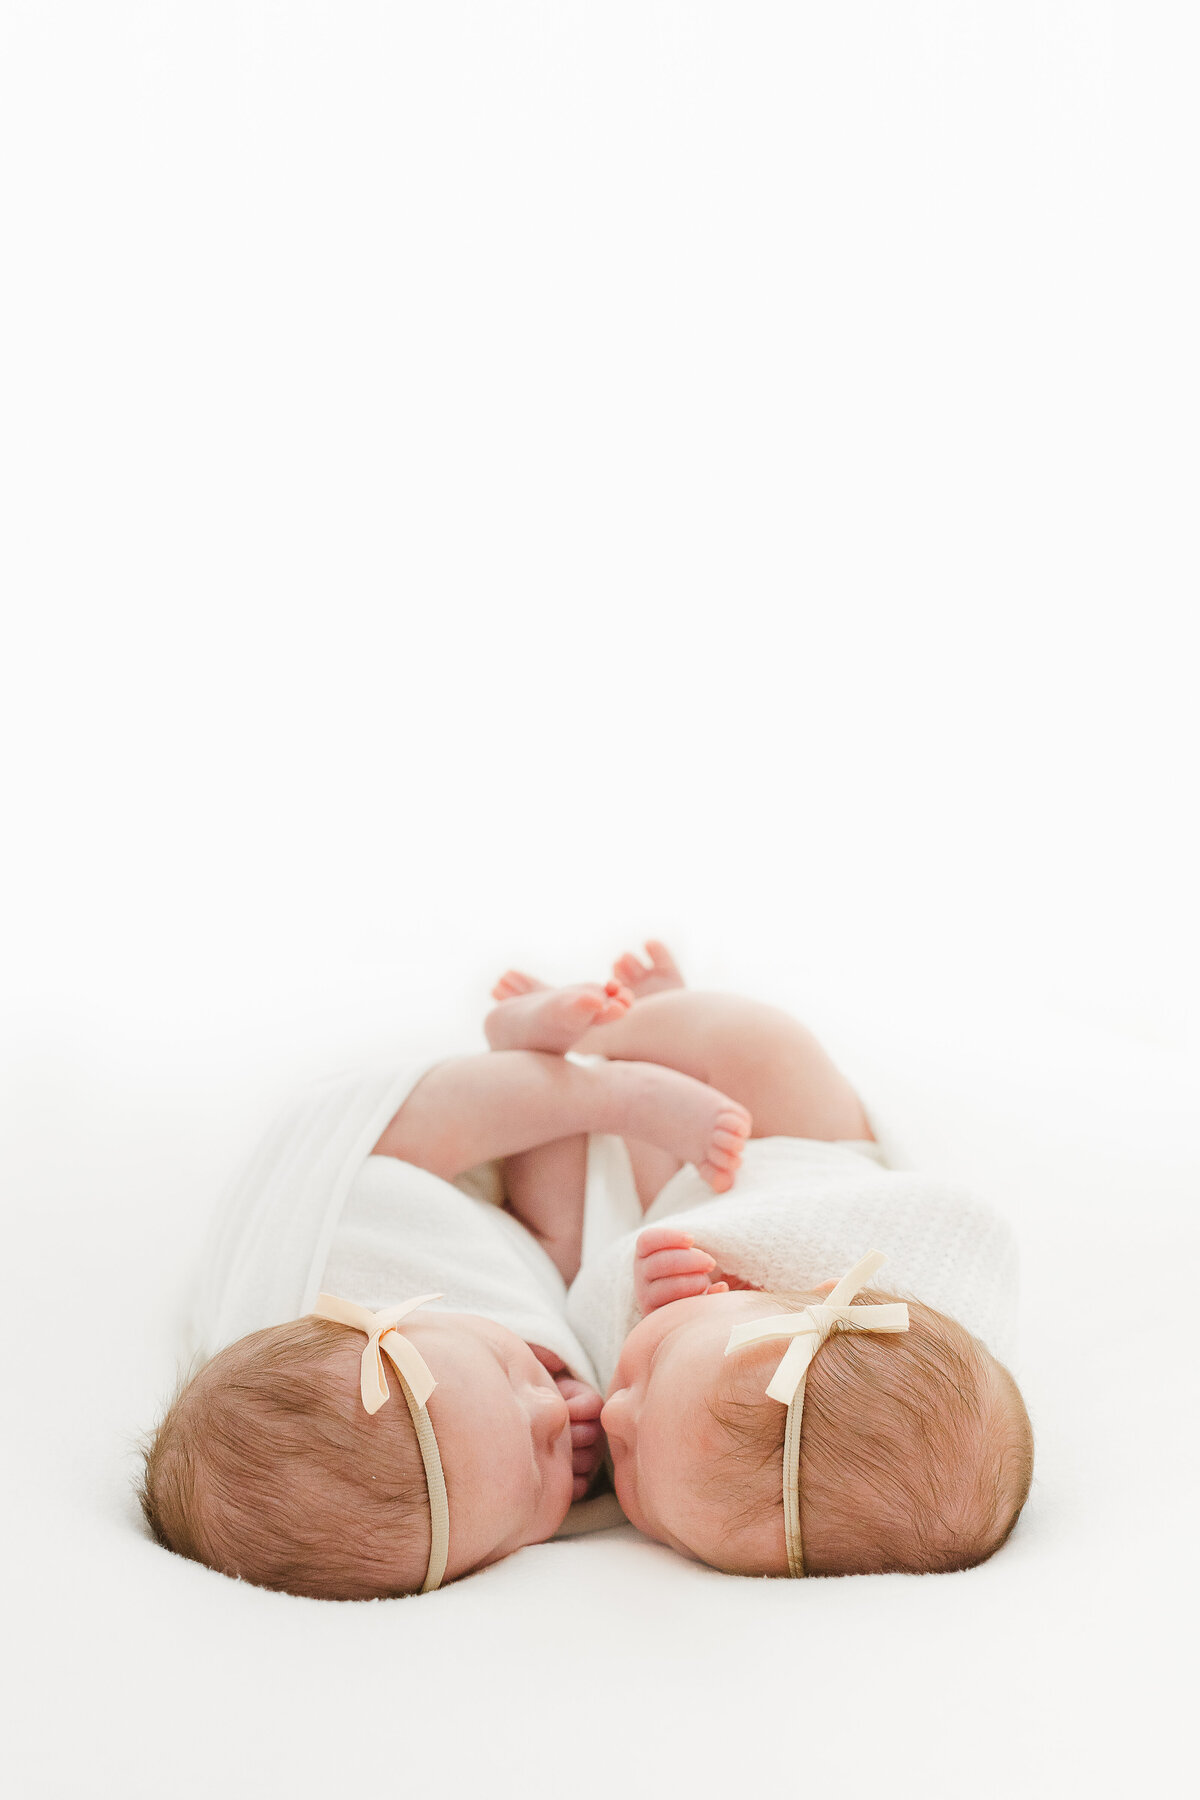 Twin Newborn Babies in our Northern Virginia Studio